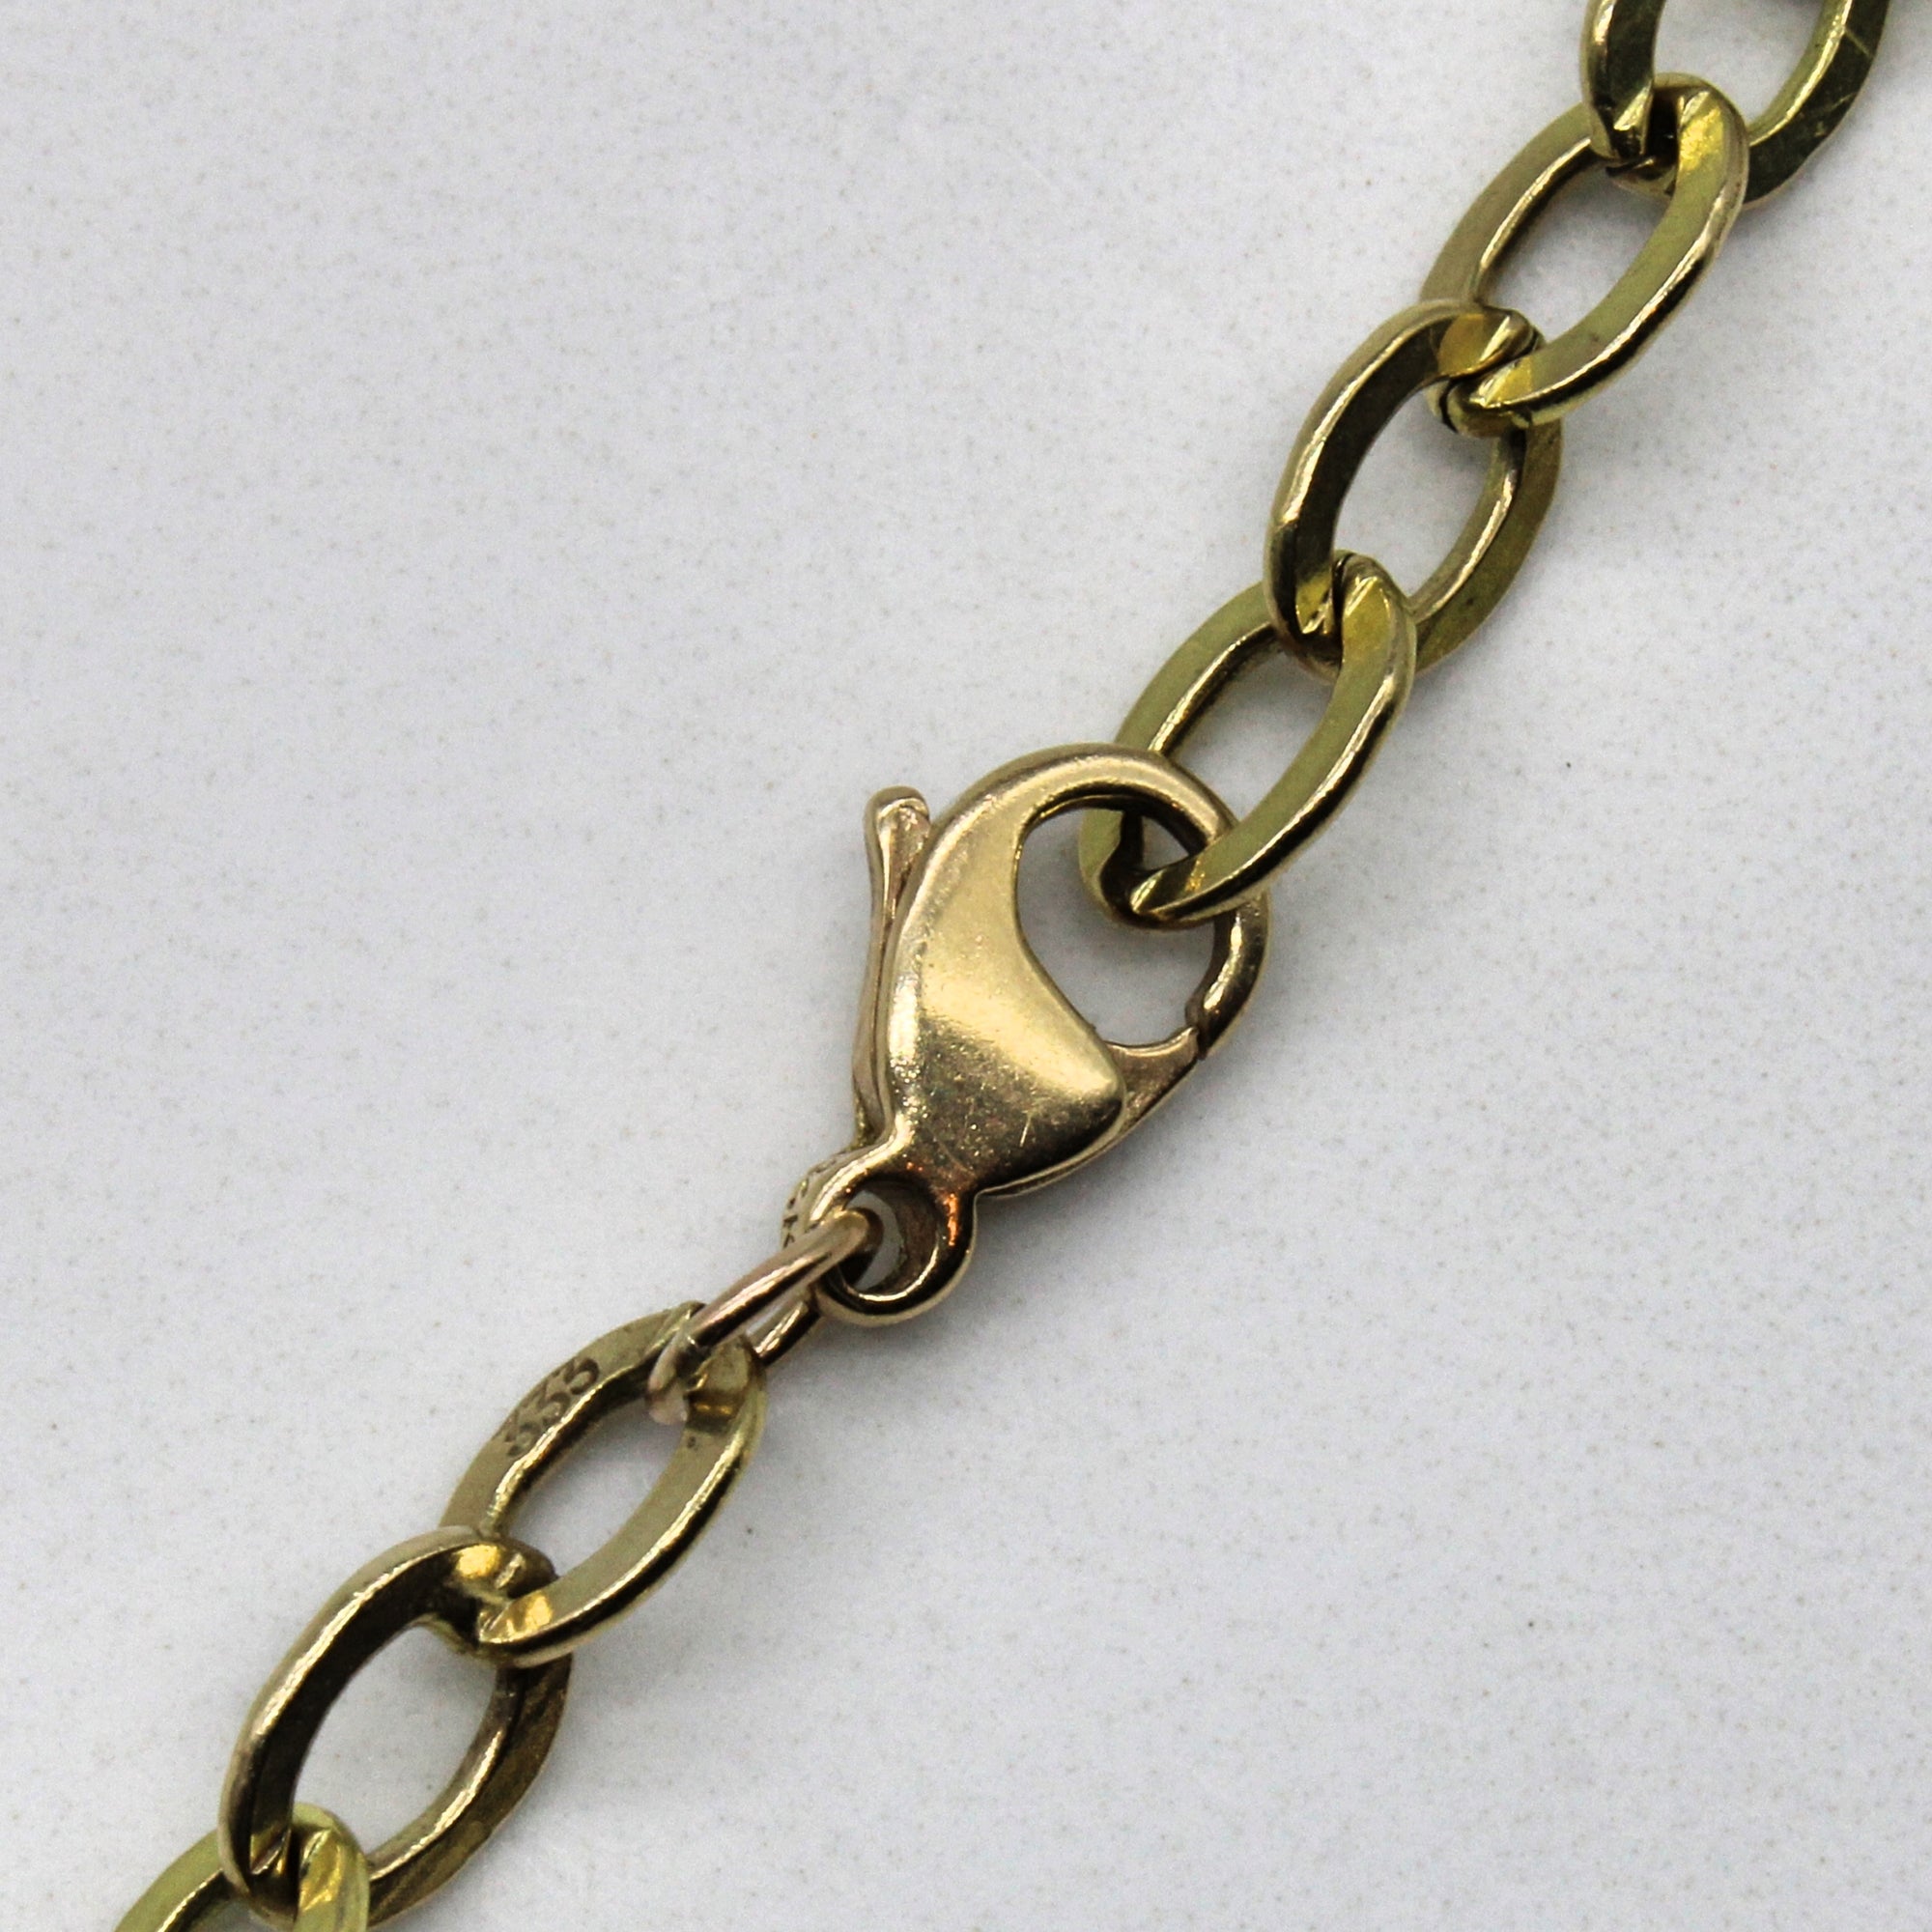 10k Yellow Gold Oval Link Bracelet | 7